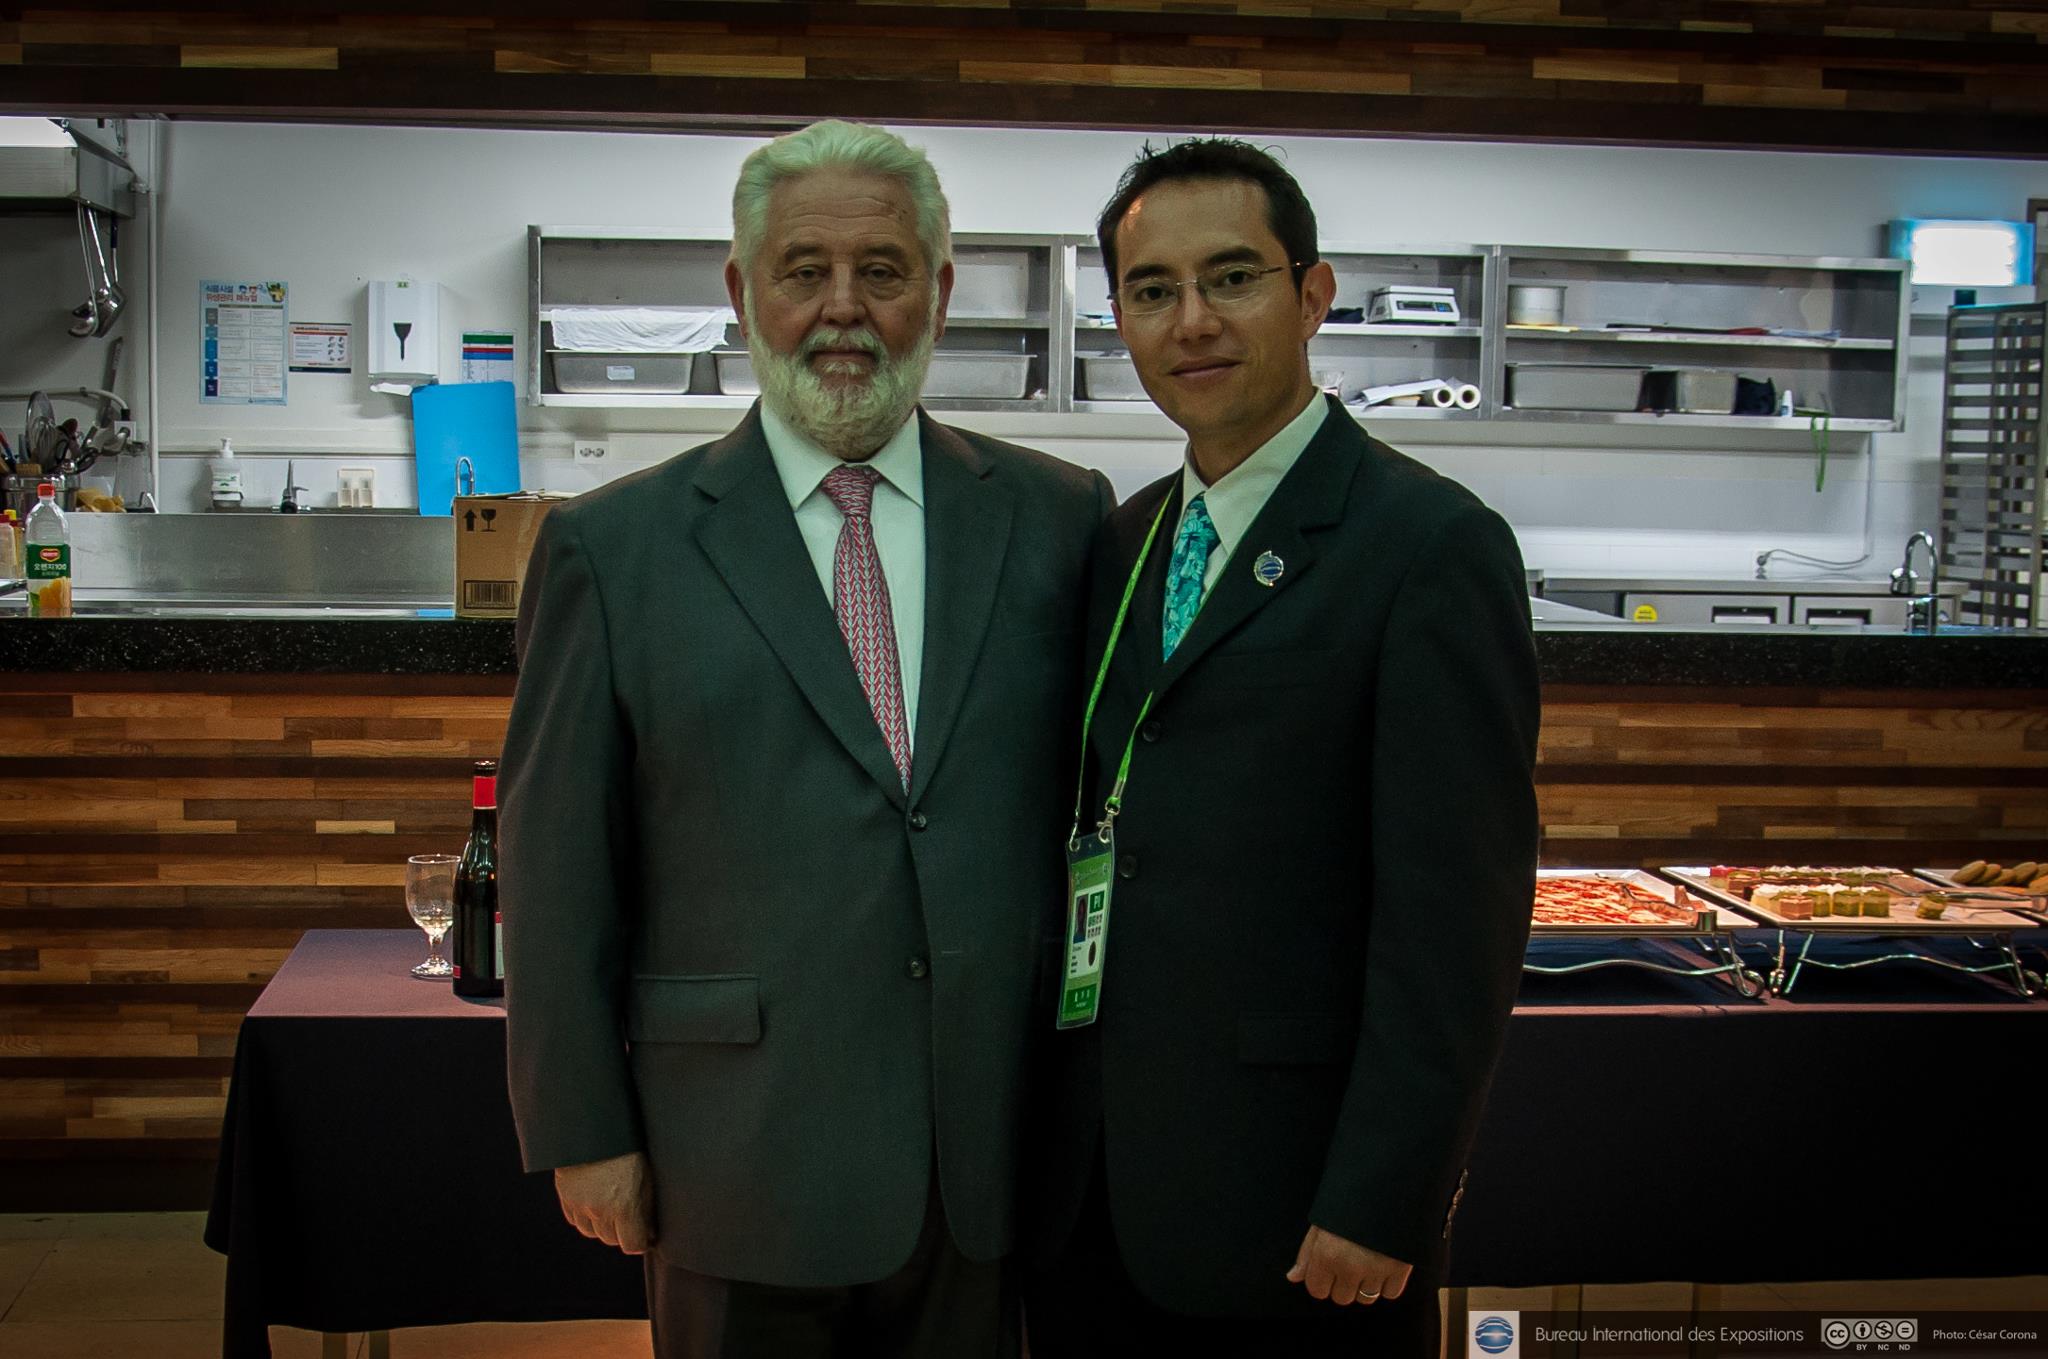 César Corona and Dr. Vicente González Loscertales, Secretary General of the BIE, at Expo 2012 Yeosu